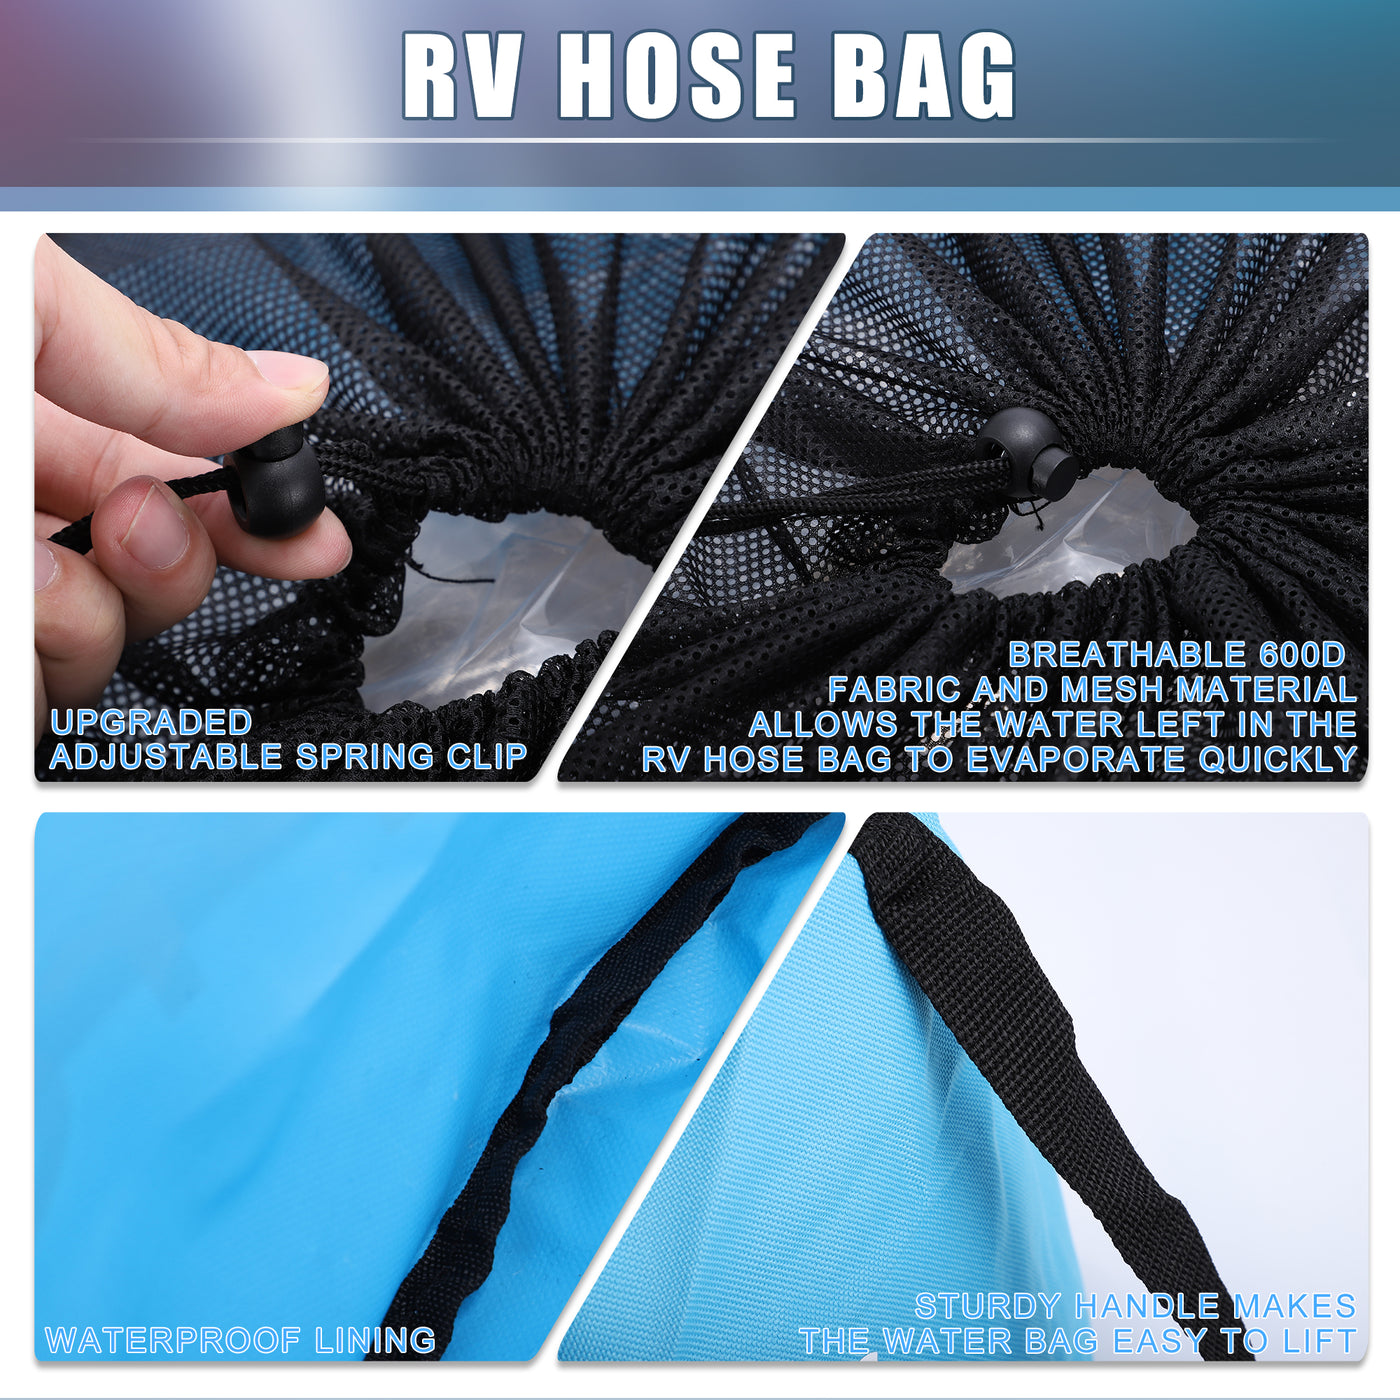 A ABSOPRO RV Sewer Hose Storage Bags Waterproof RV Hose Storage Bags RV Accessories Bag Camper Utility Bag Yellow Blue Black (Set of 3)